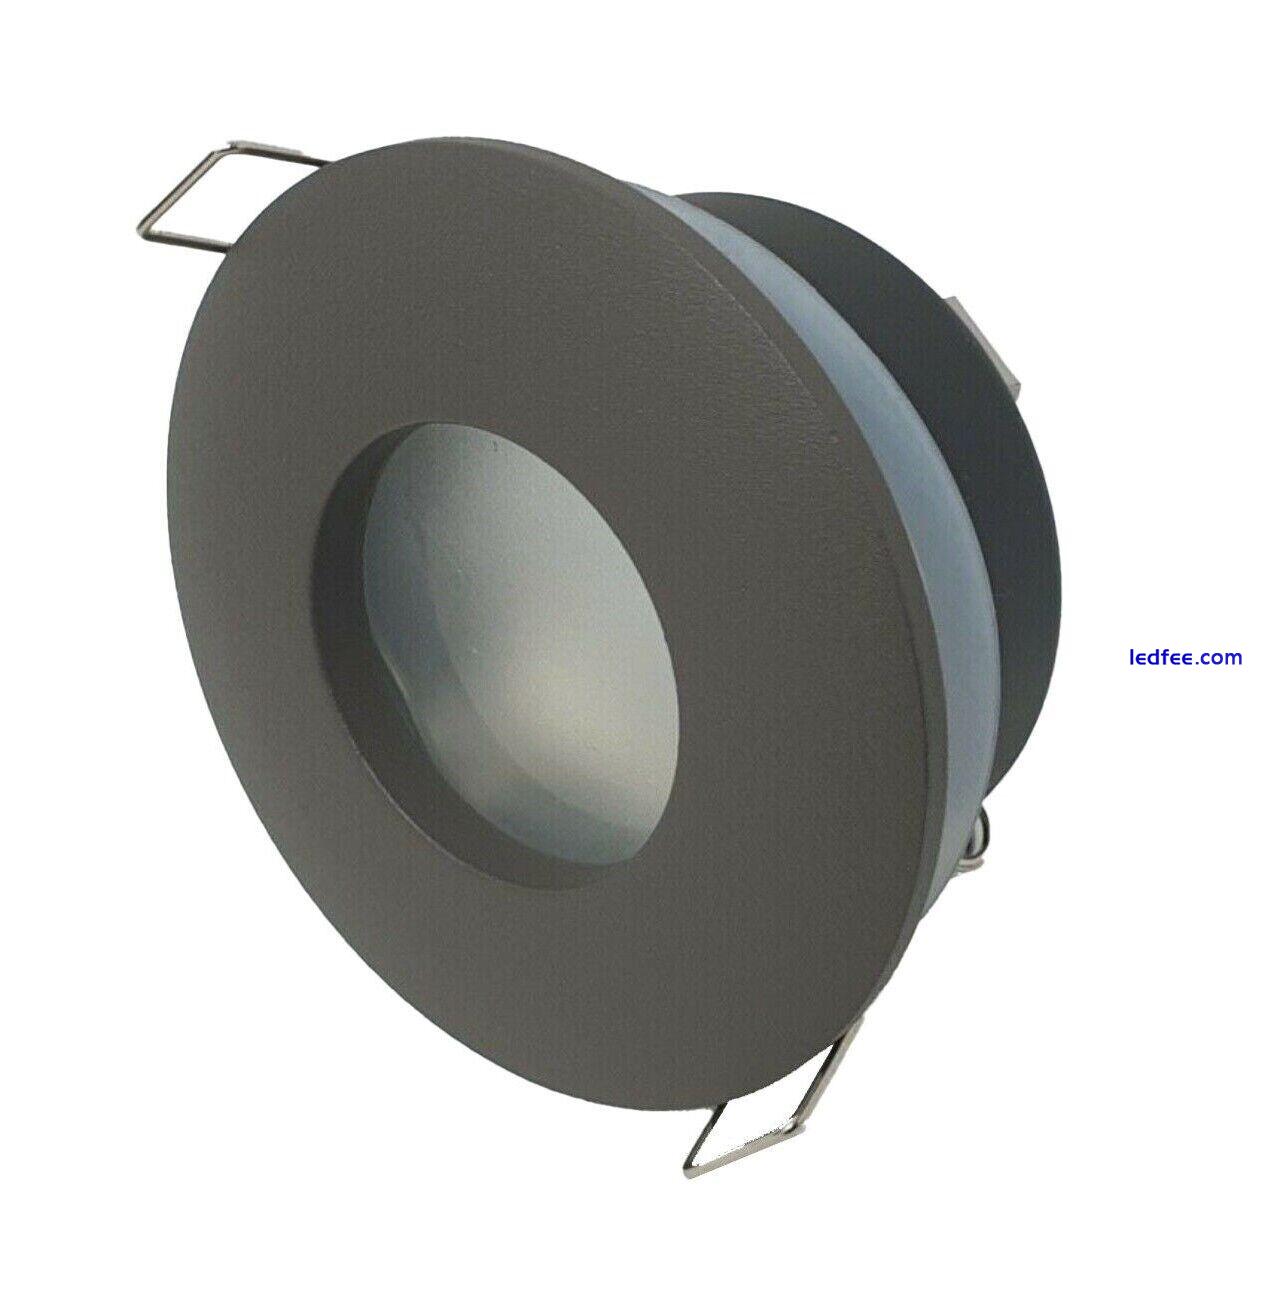 4x LED Recessed Ceiling Down Lights GU10 Round/Square IP65 Bathroom Spotlights 5 